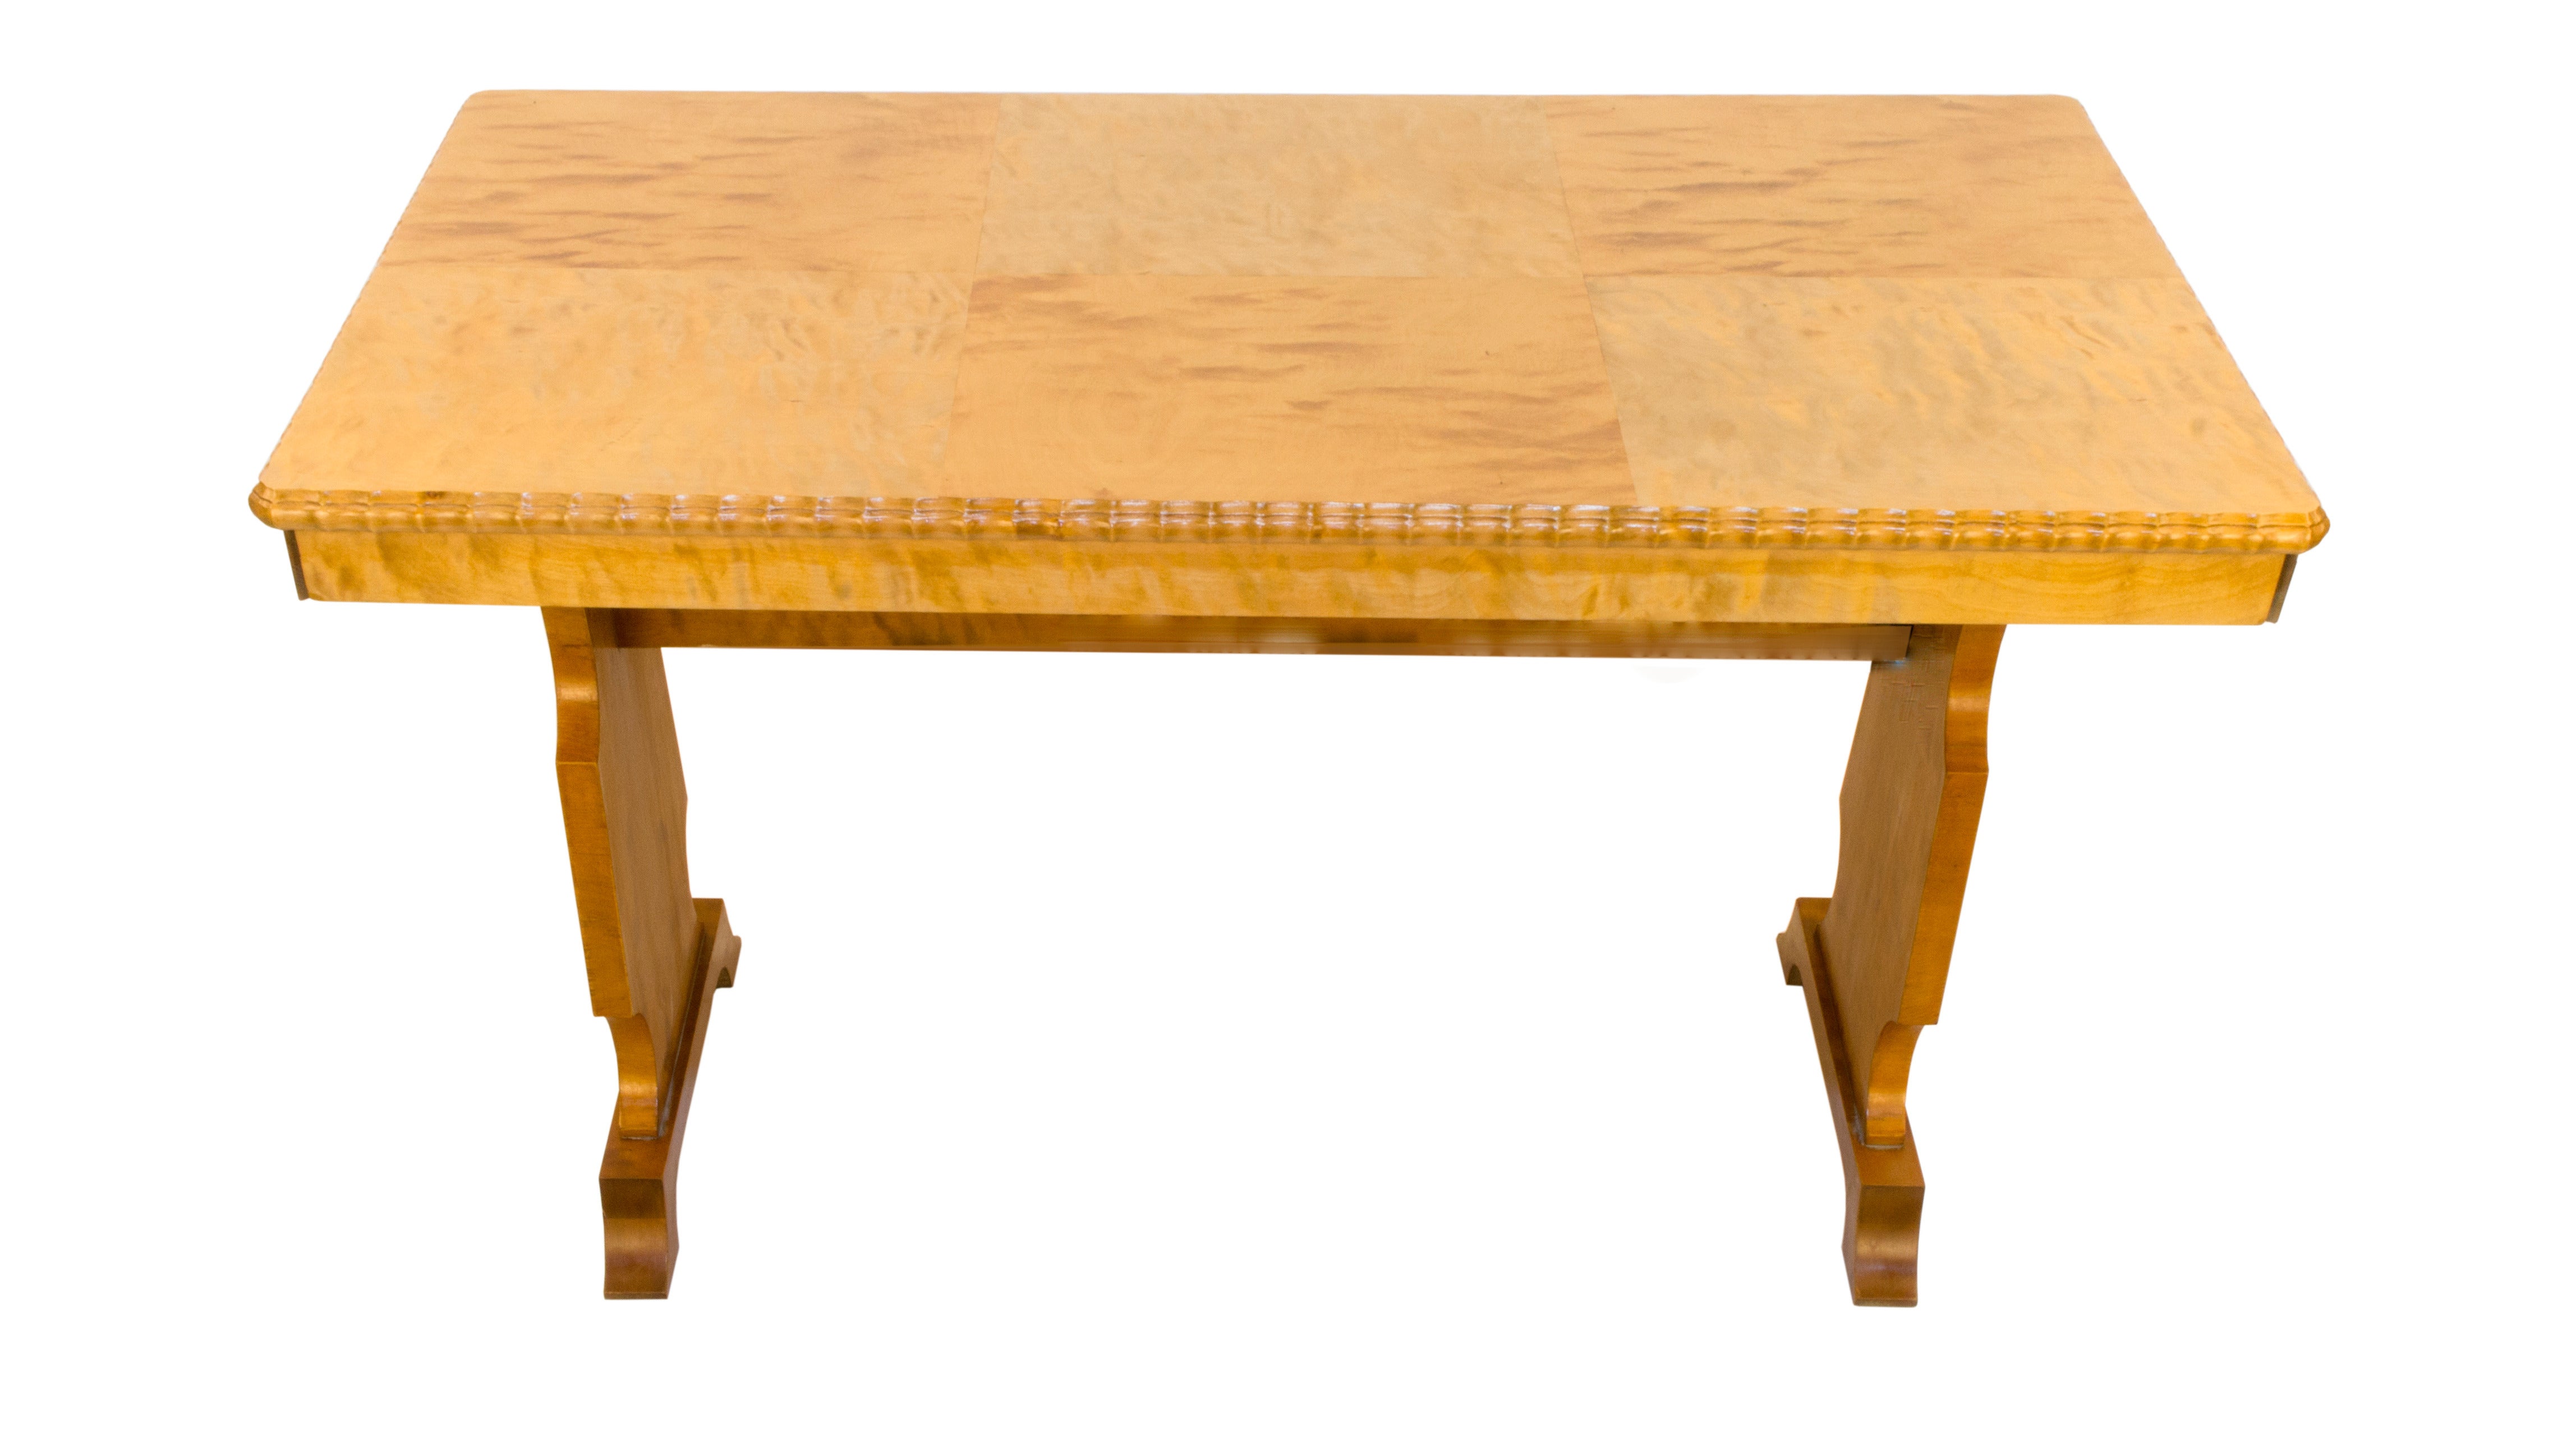 Birch Art Deco Table with Parquetry Veneered Top